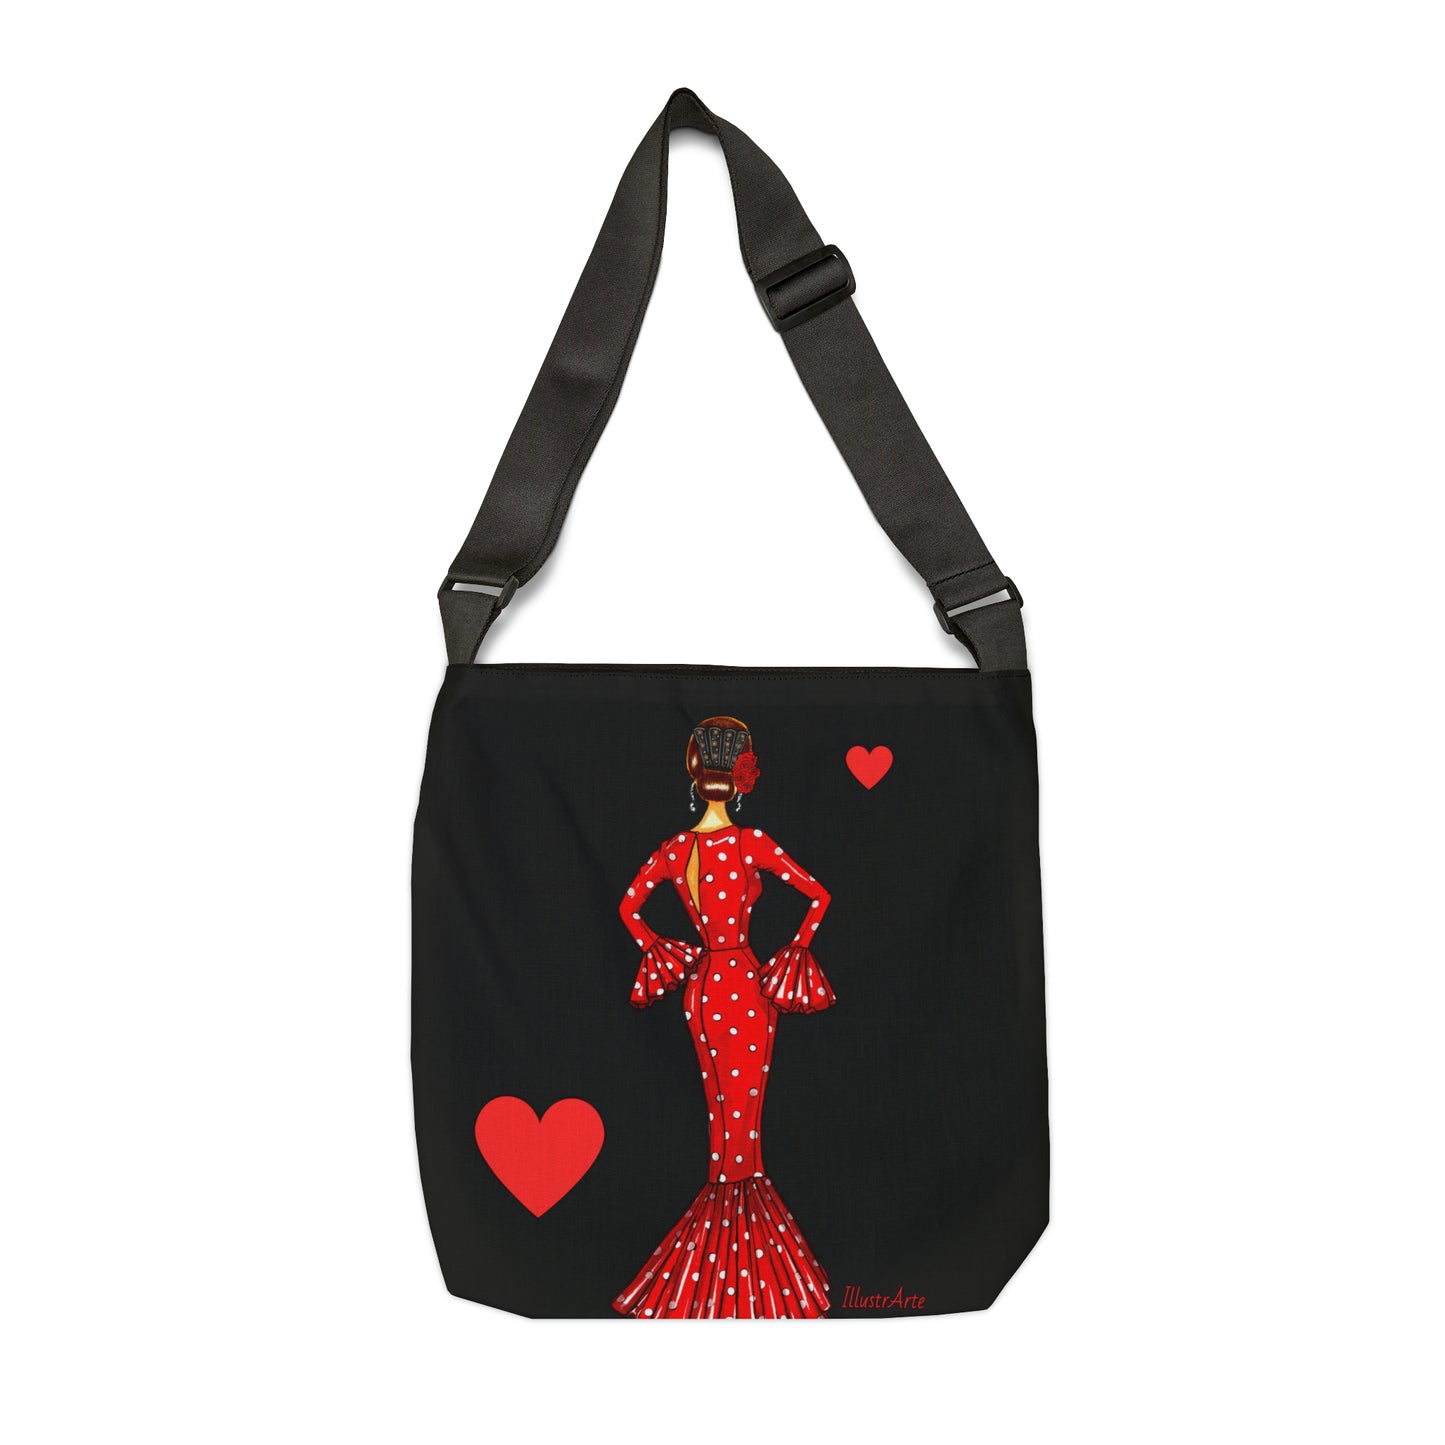 Flamenco Dancer Tote Bag with adjustable straps, red dress and black polka dots design.